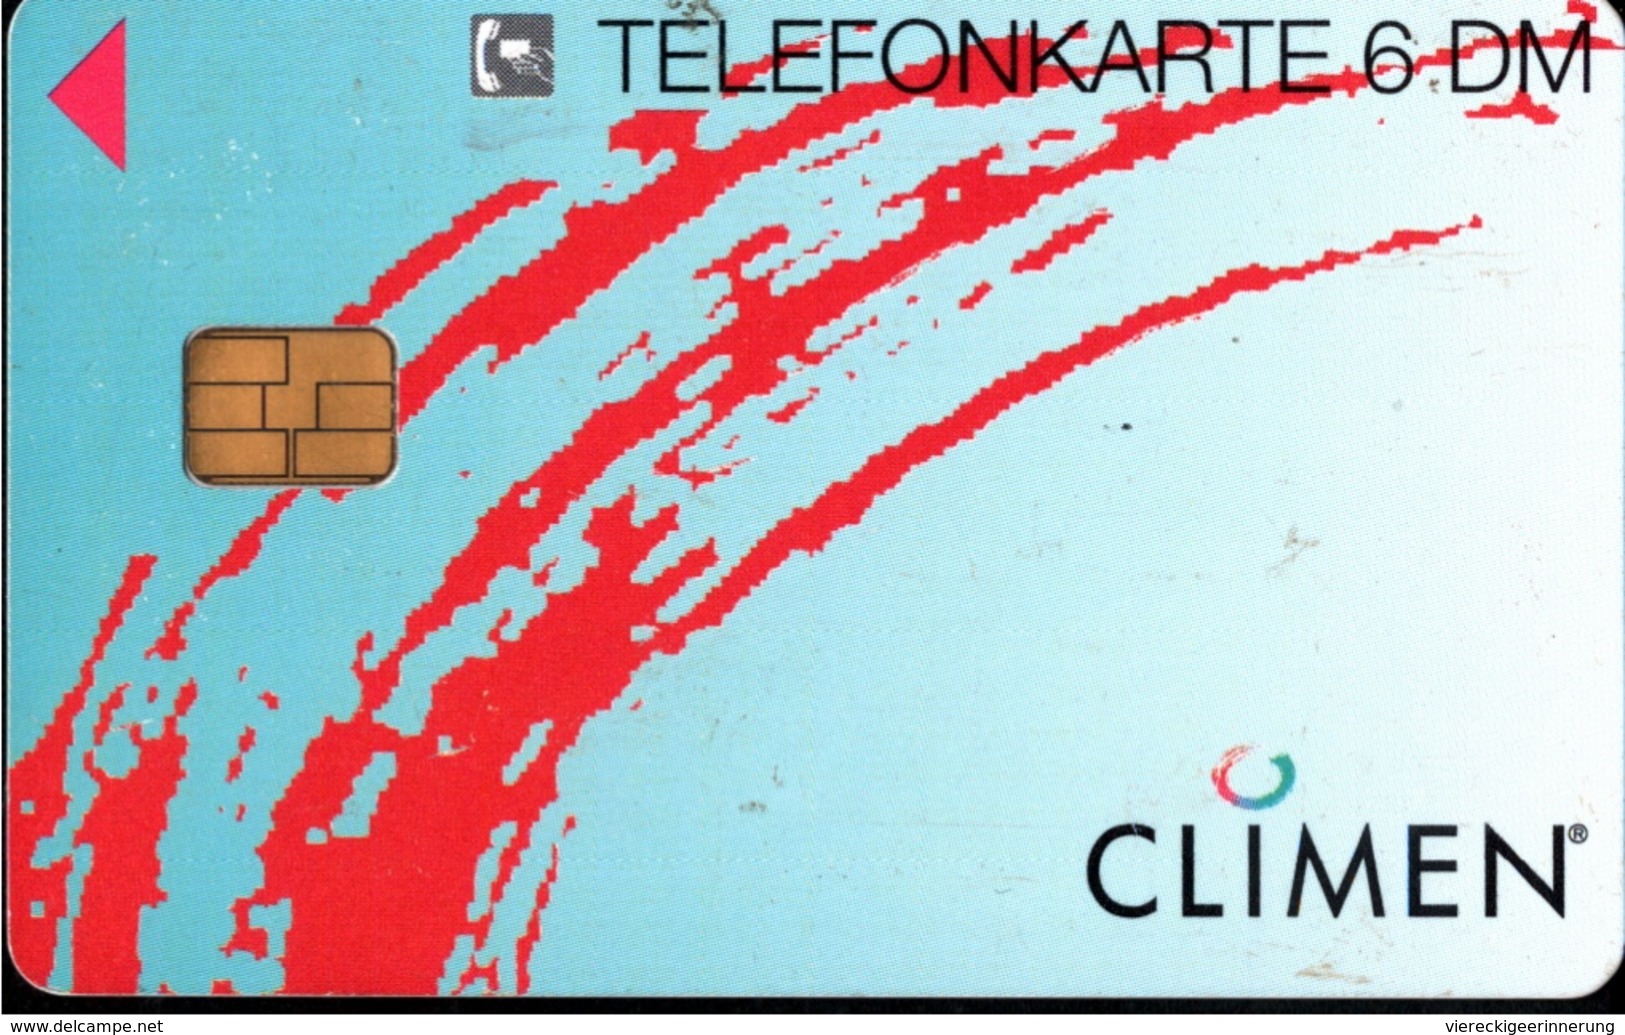 ! Telefonkarte, Telecarte, Phonecard, 1996, O799, Auflage 3000, Schering, Climen, Germany - O-Series : Customers Sets